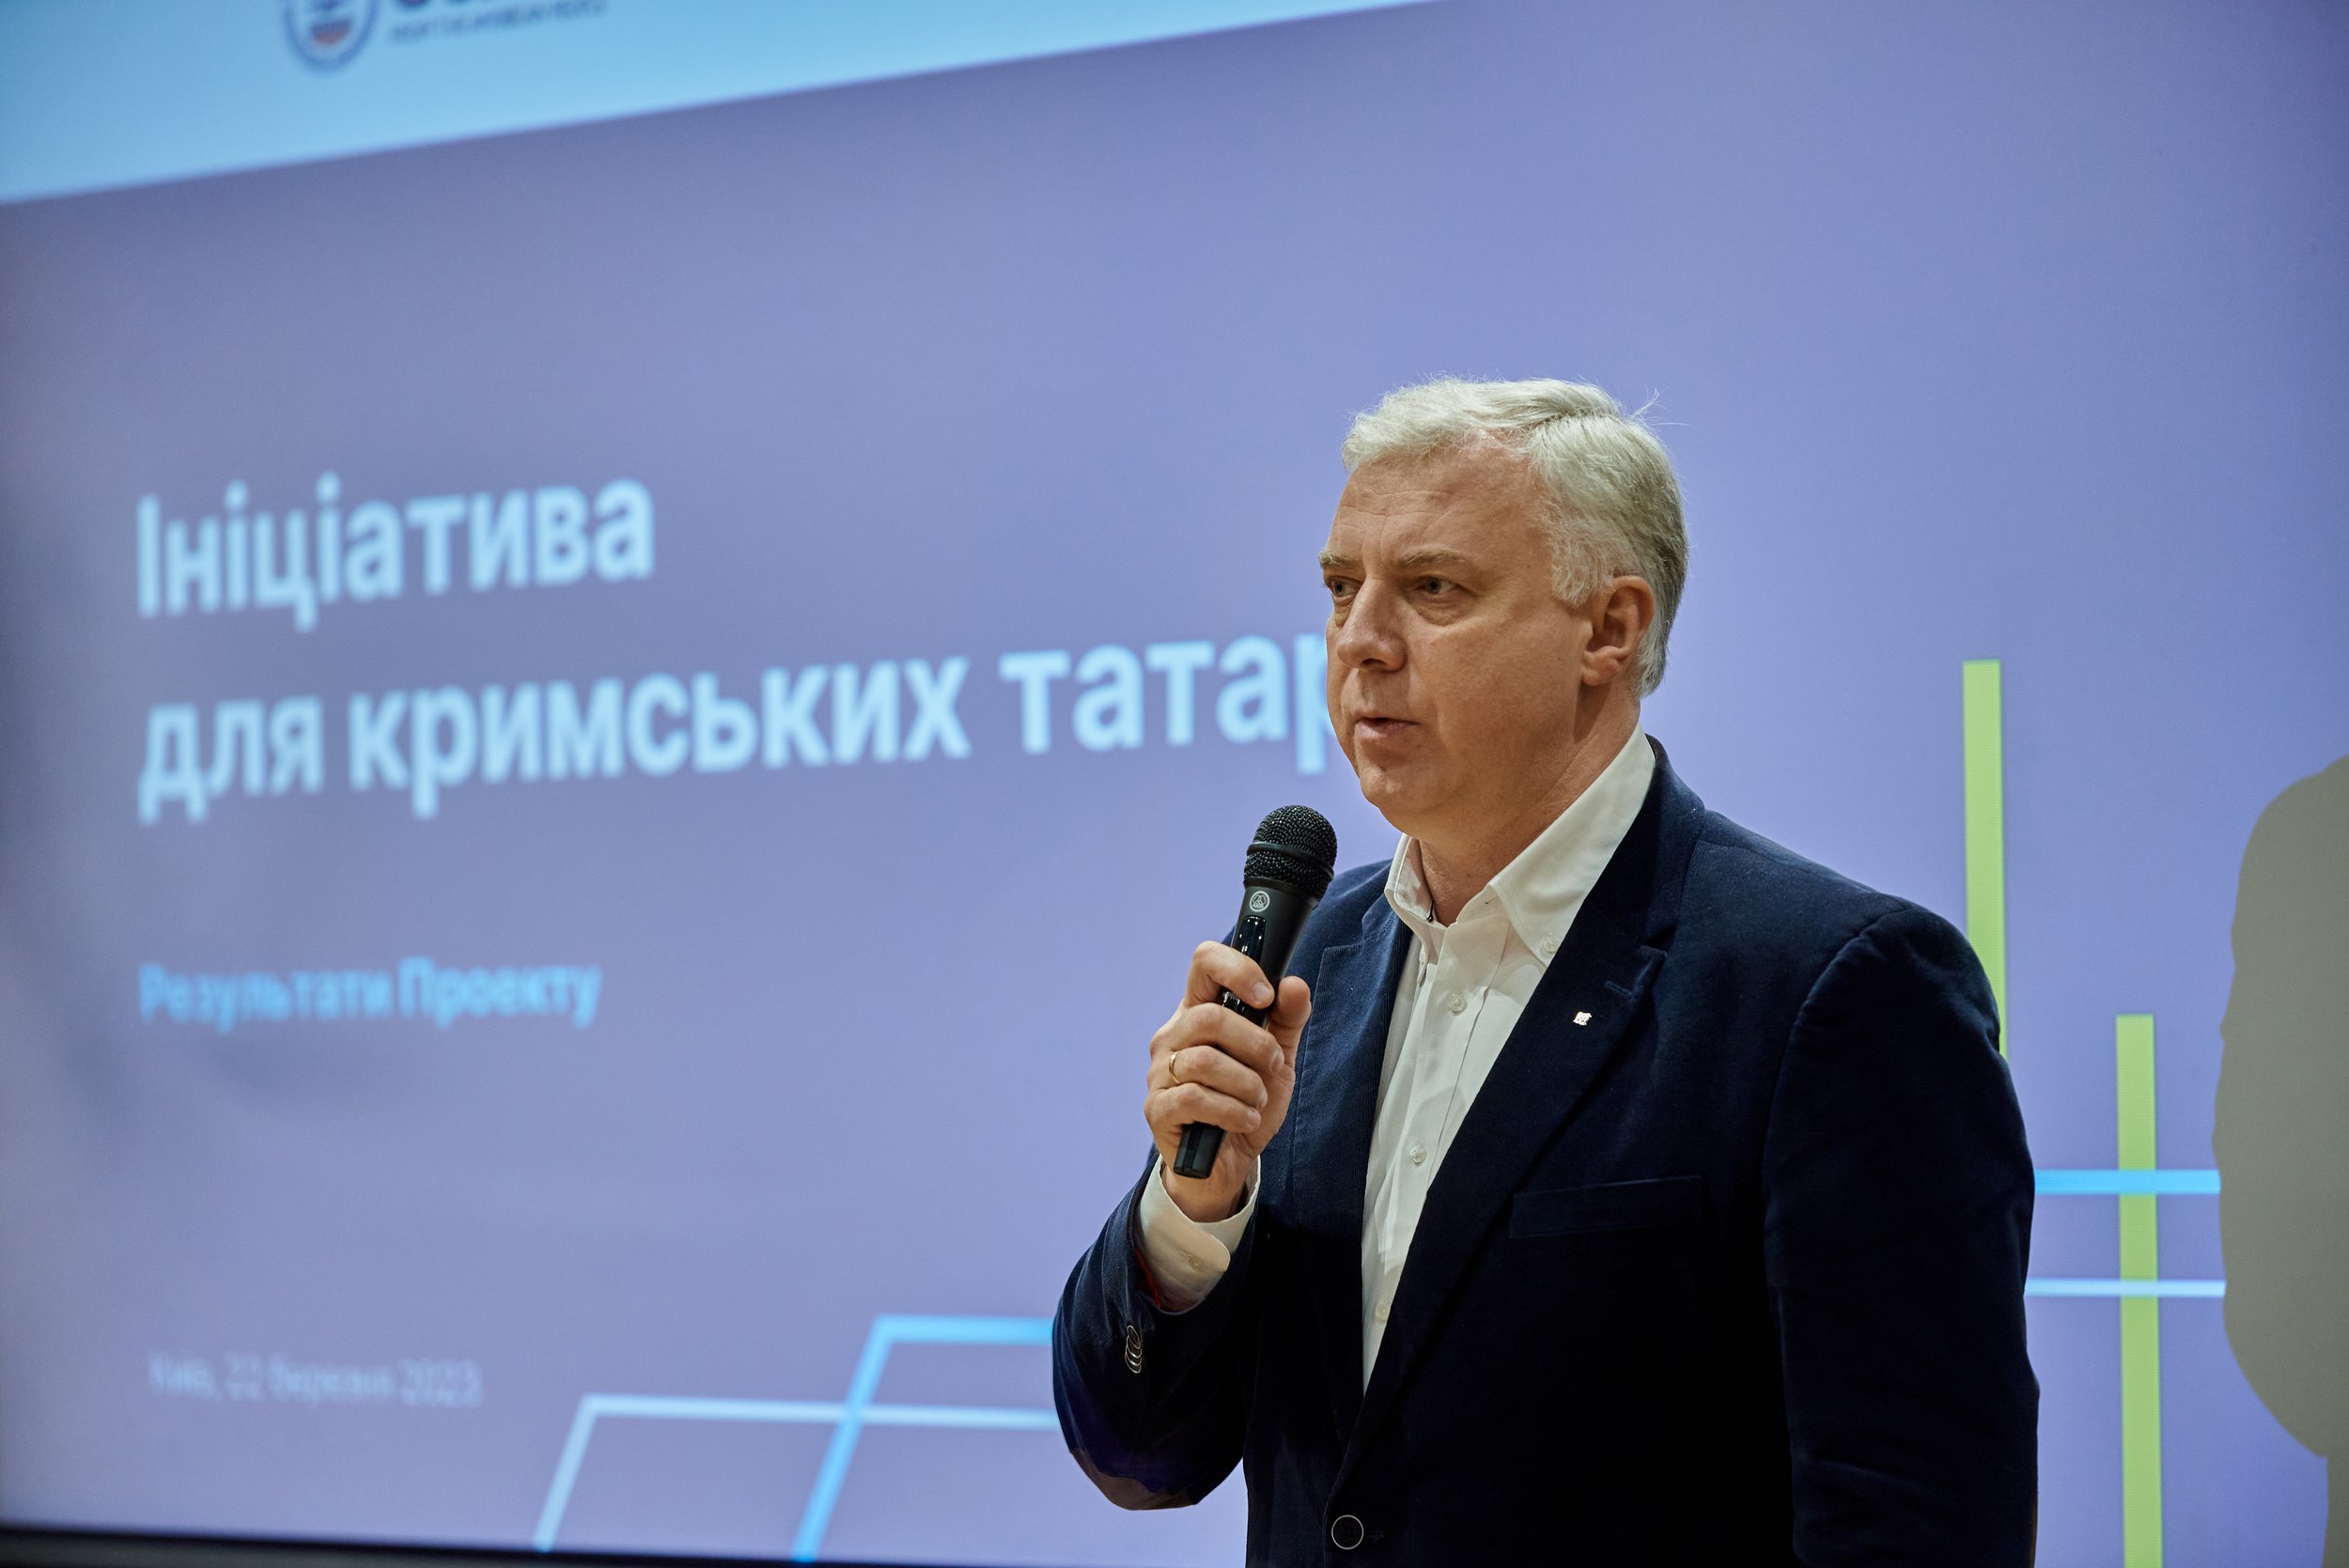 Serhiy Kvit, KMA President